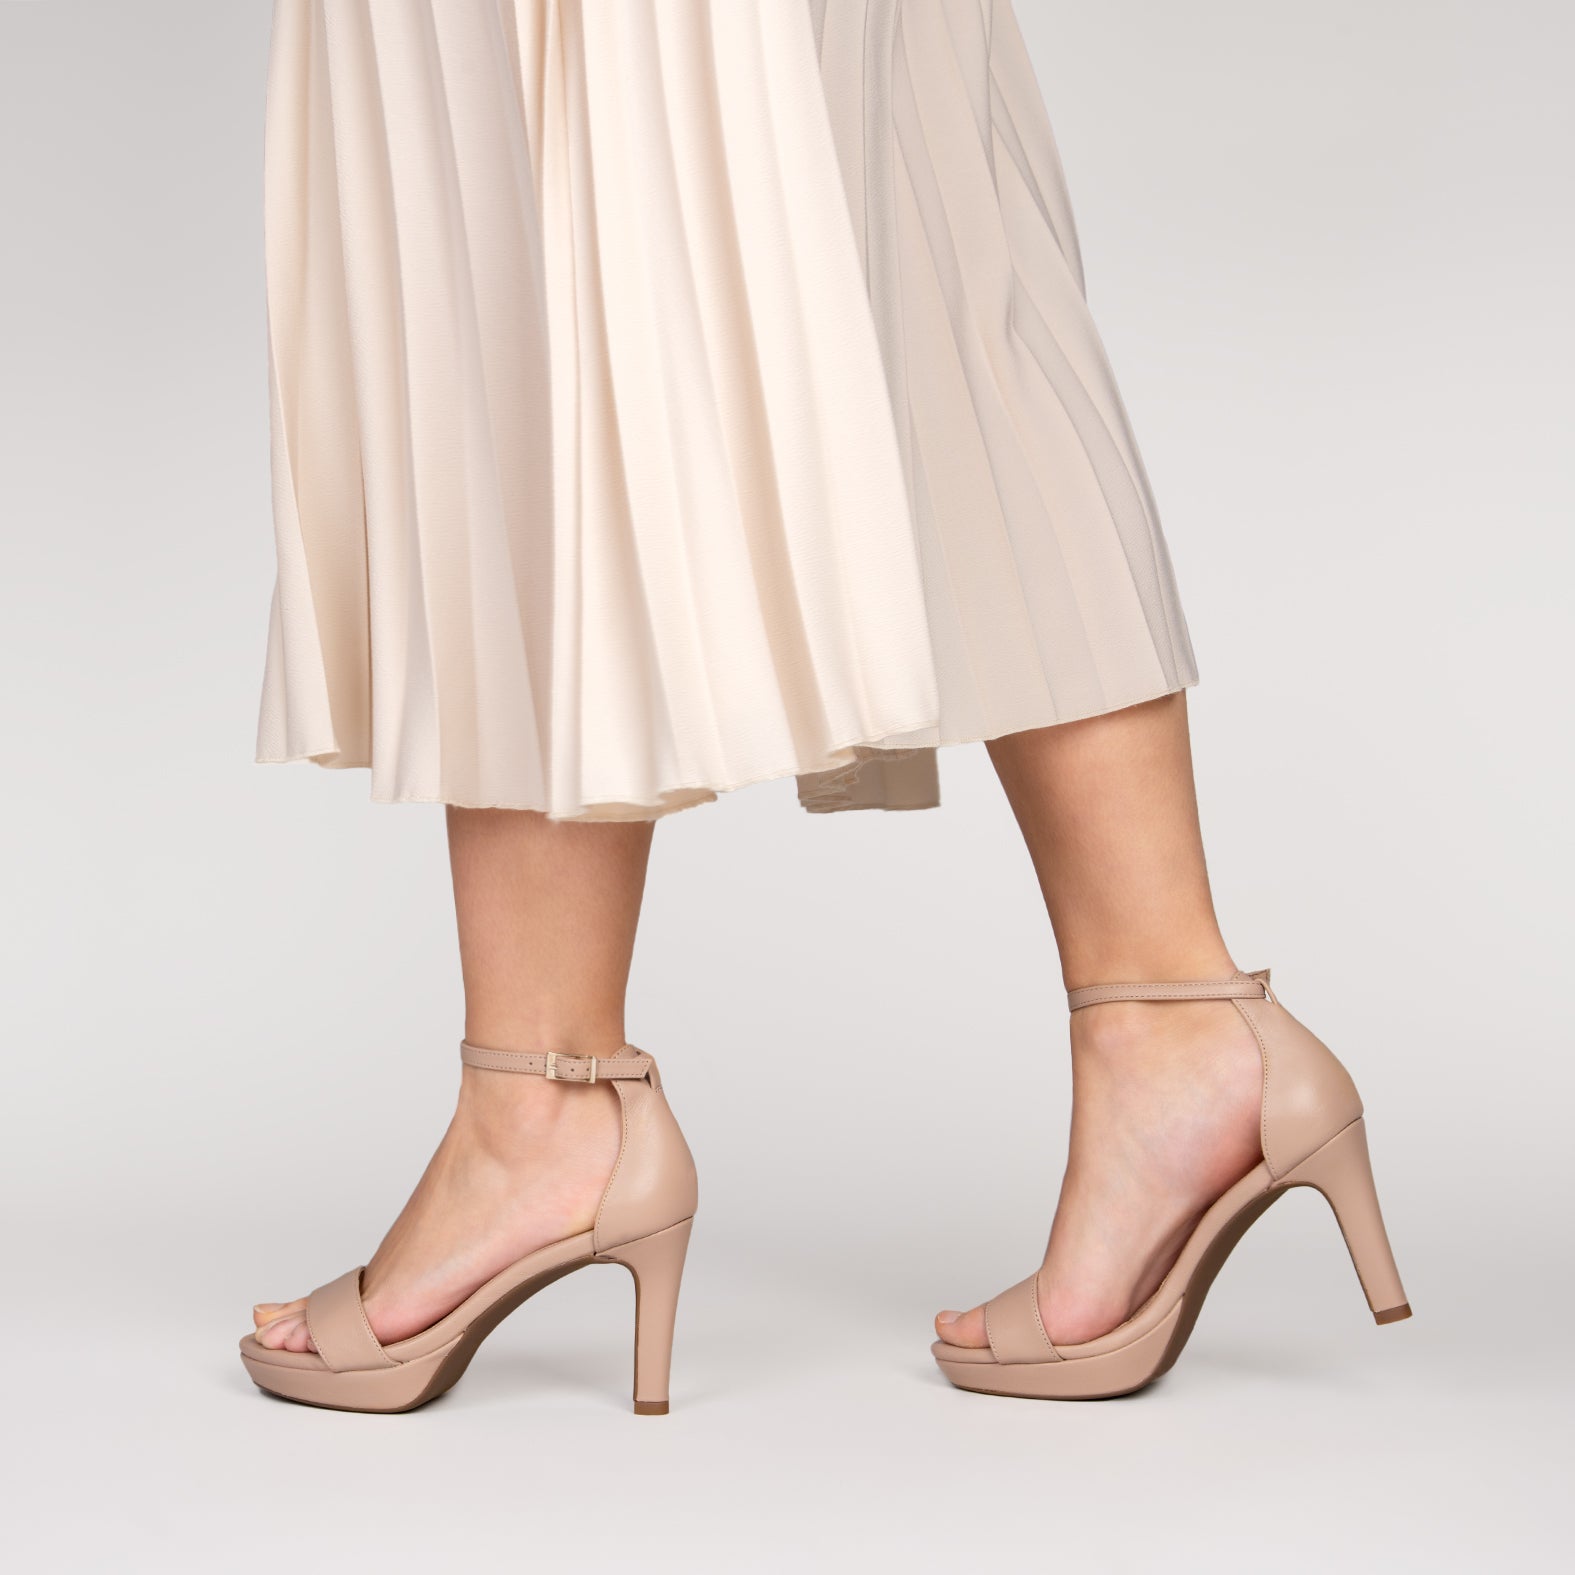 PARTY – BEIGE high-heeled platform sandals